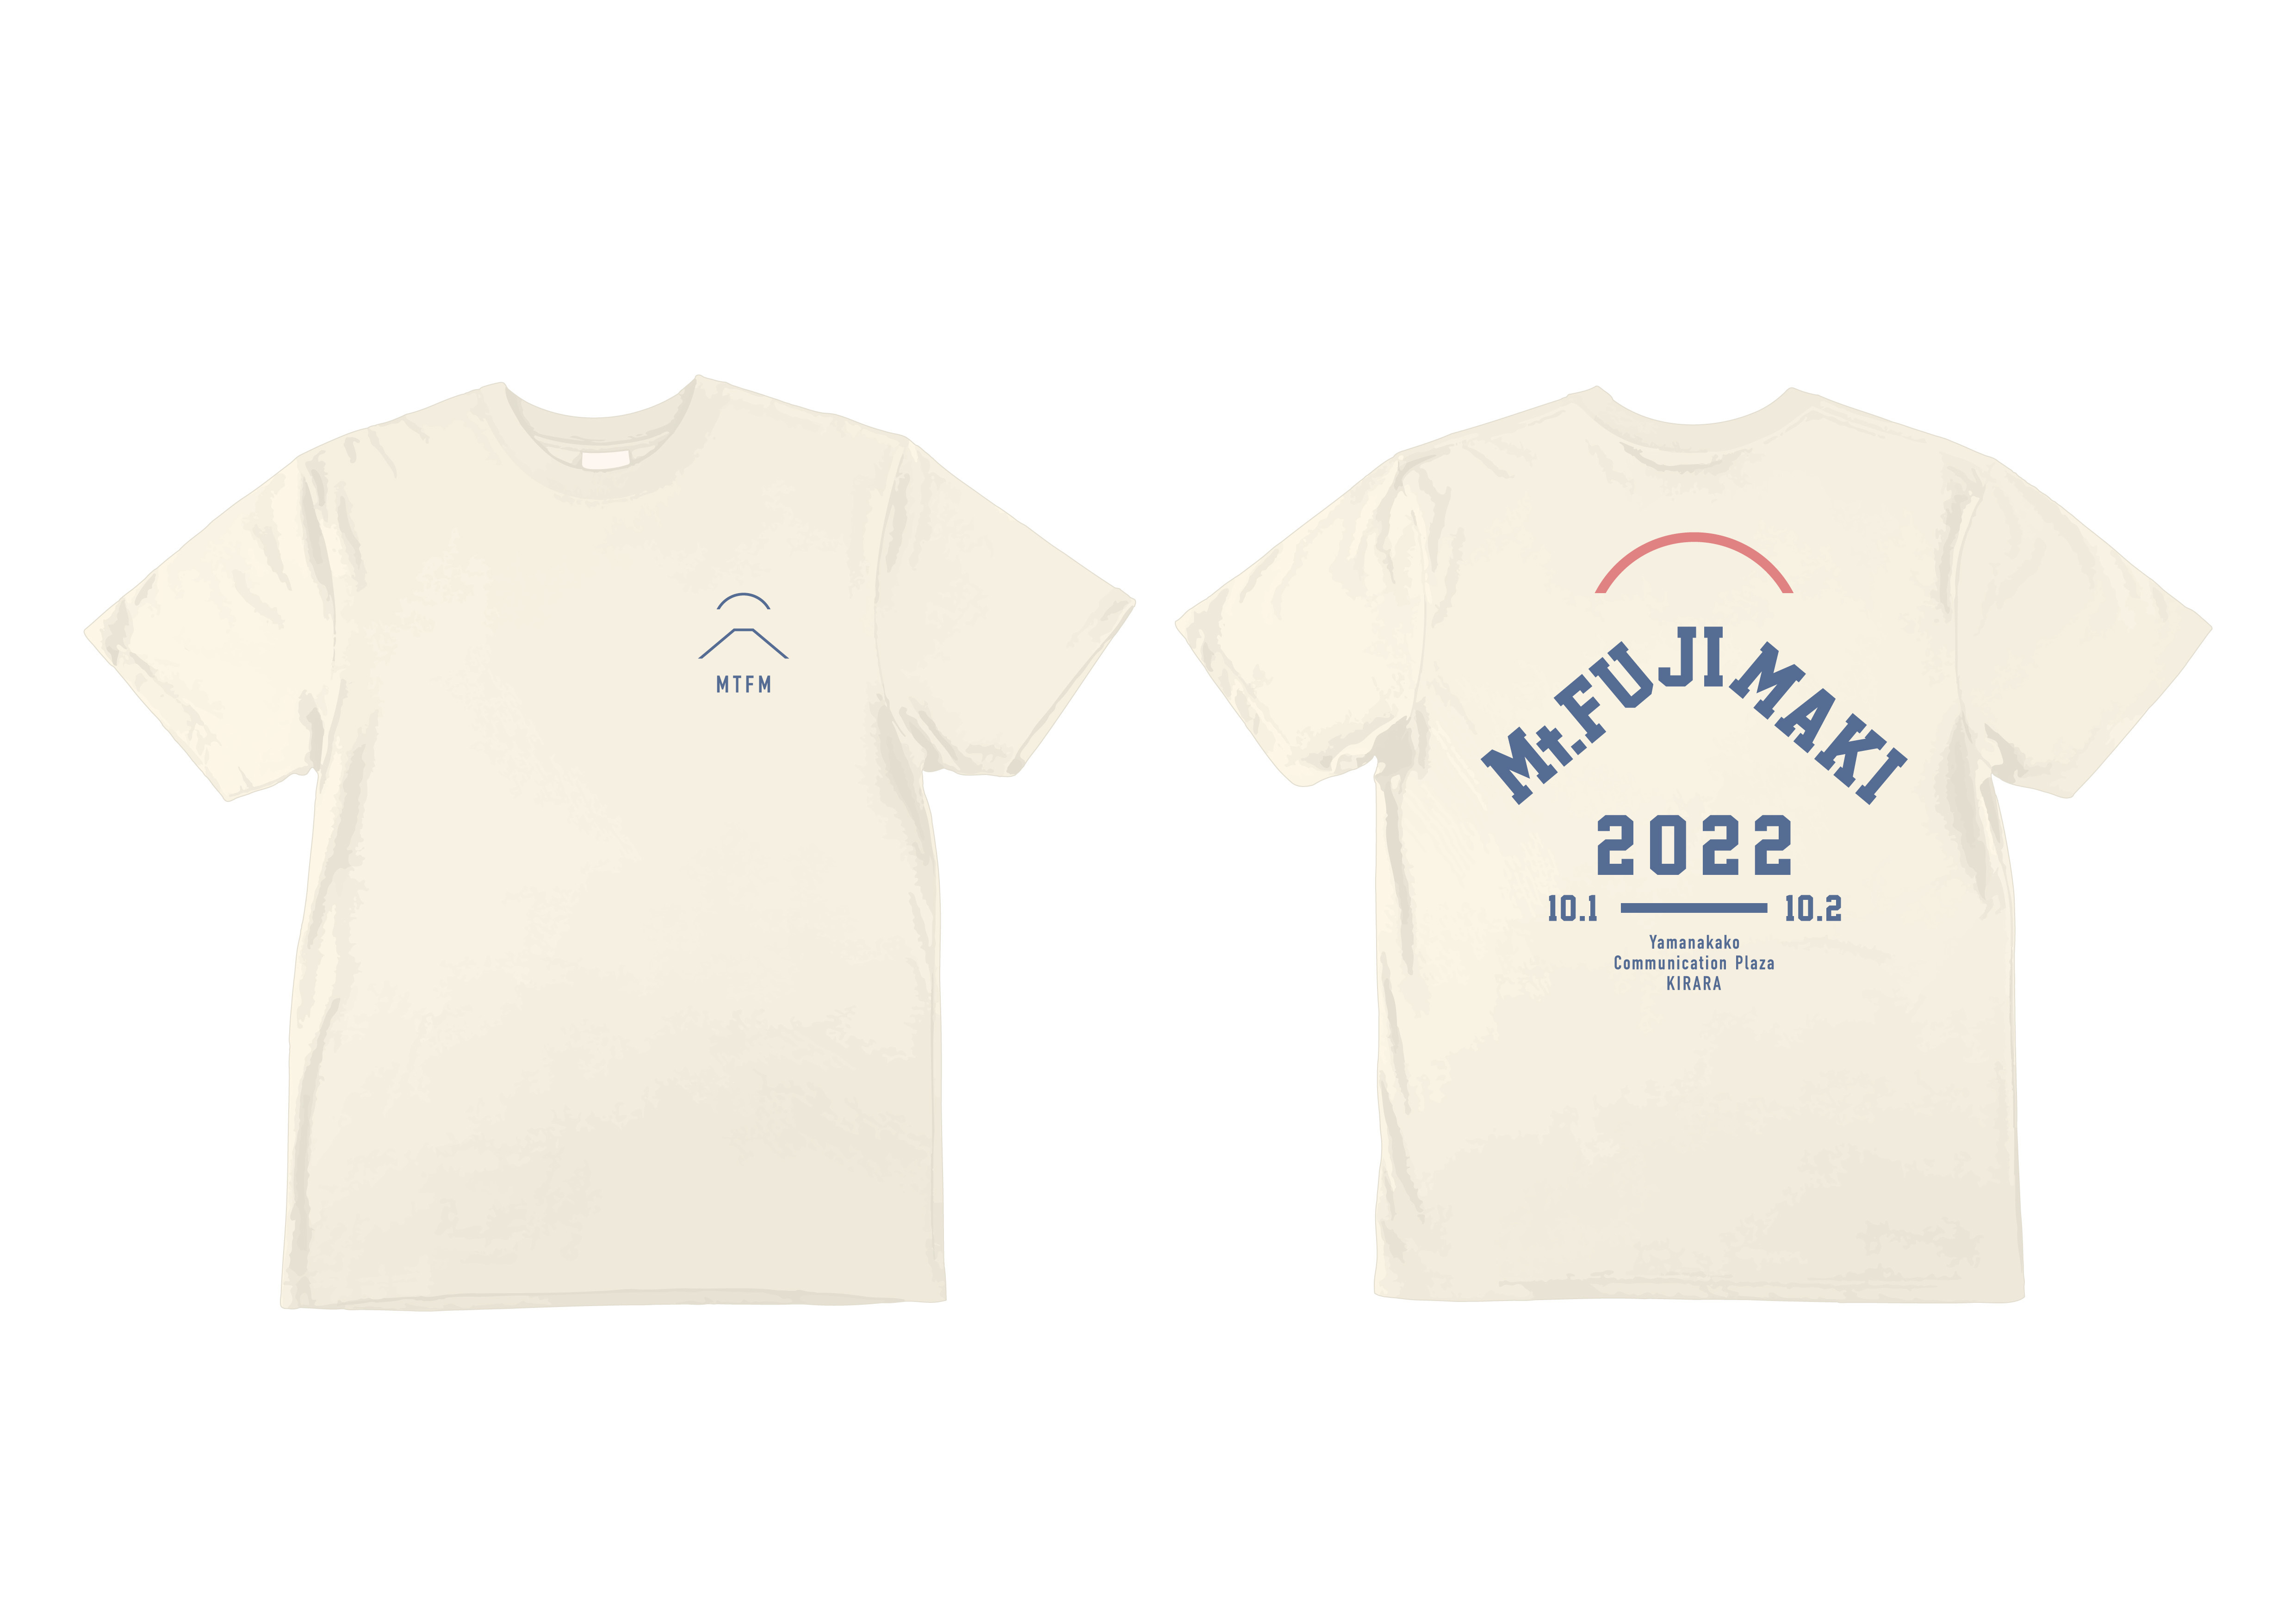 「Mt.FUJIMAKI2022 」特典付きチケット限定Tシャツ(バニラホワイト)